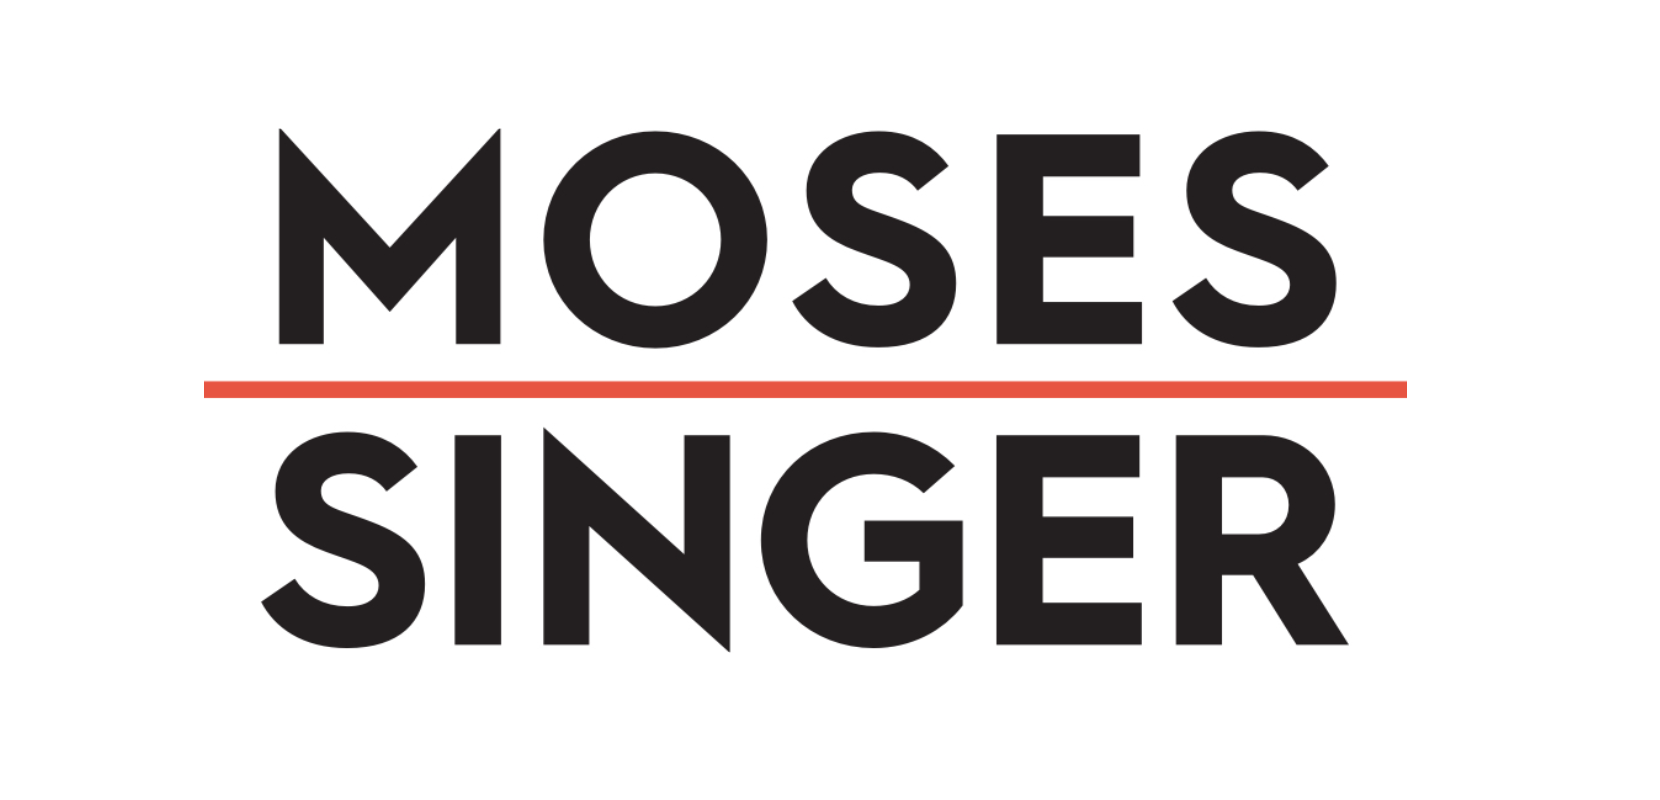 Moses & Singer LLP